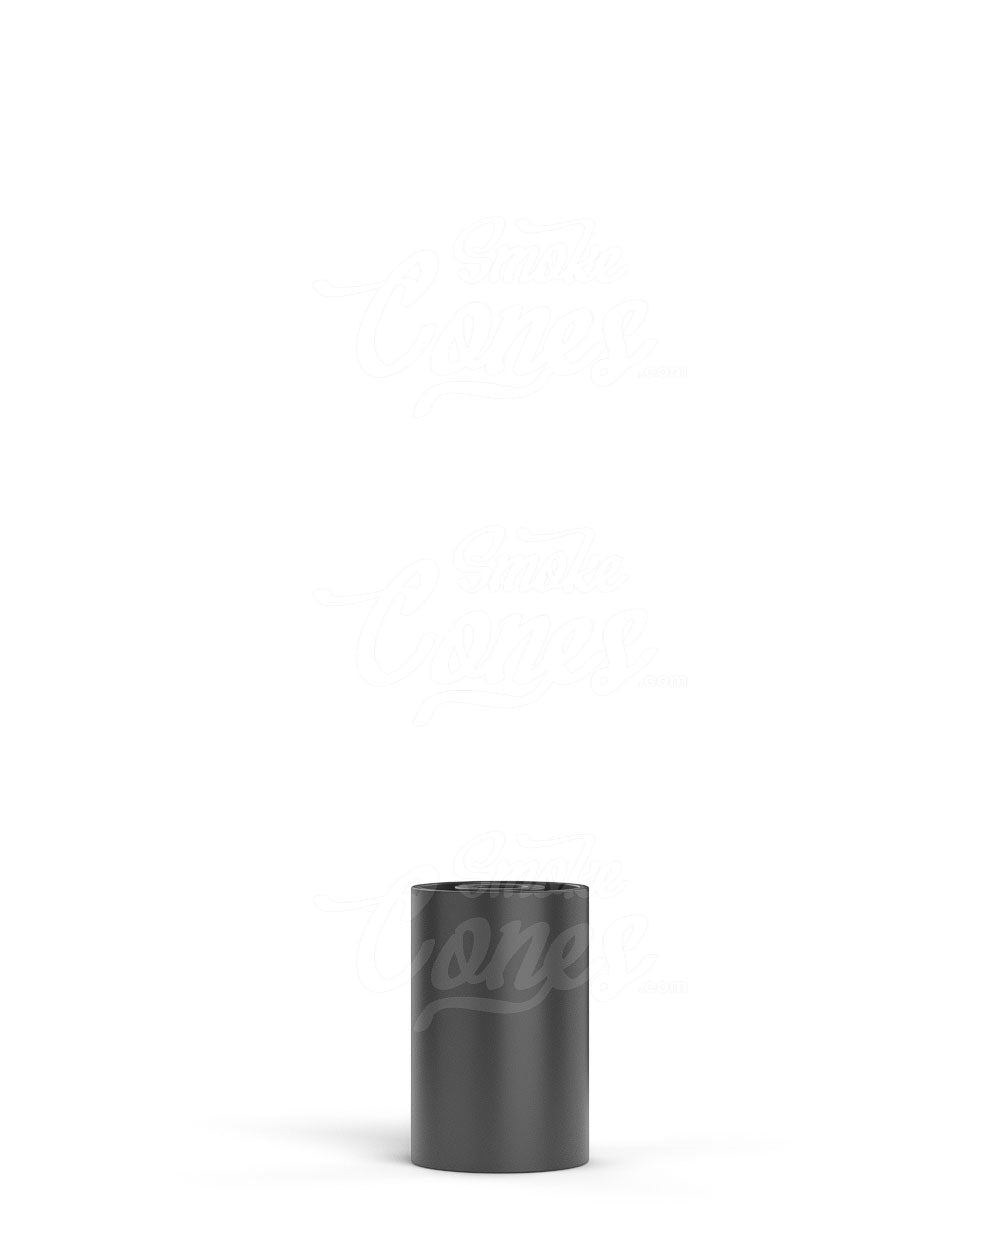 35mm Pollen Gear Five10 Child Resistant Flat Vape Cartridge Tube Base - Matte Black - 1400/Box - 3